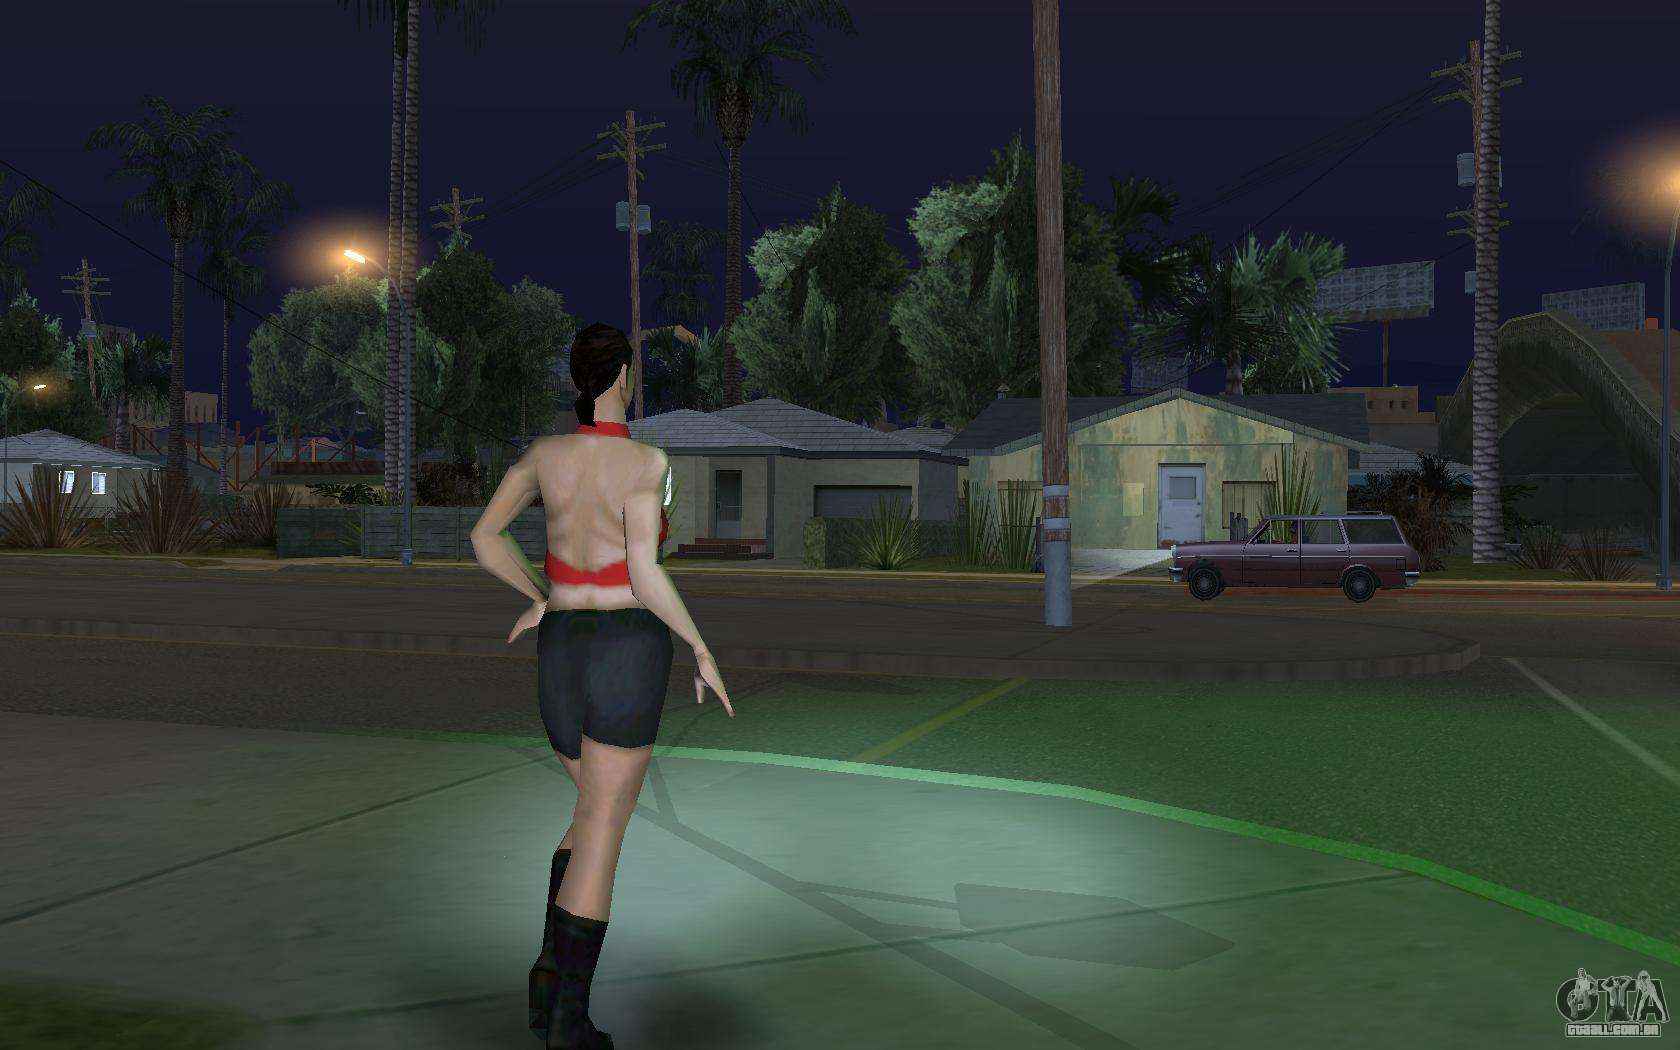 Games memória: GTA San Andreas e o modo que habilita sexo no jogo -  Infosfera